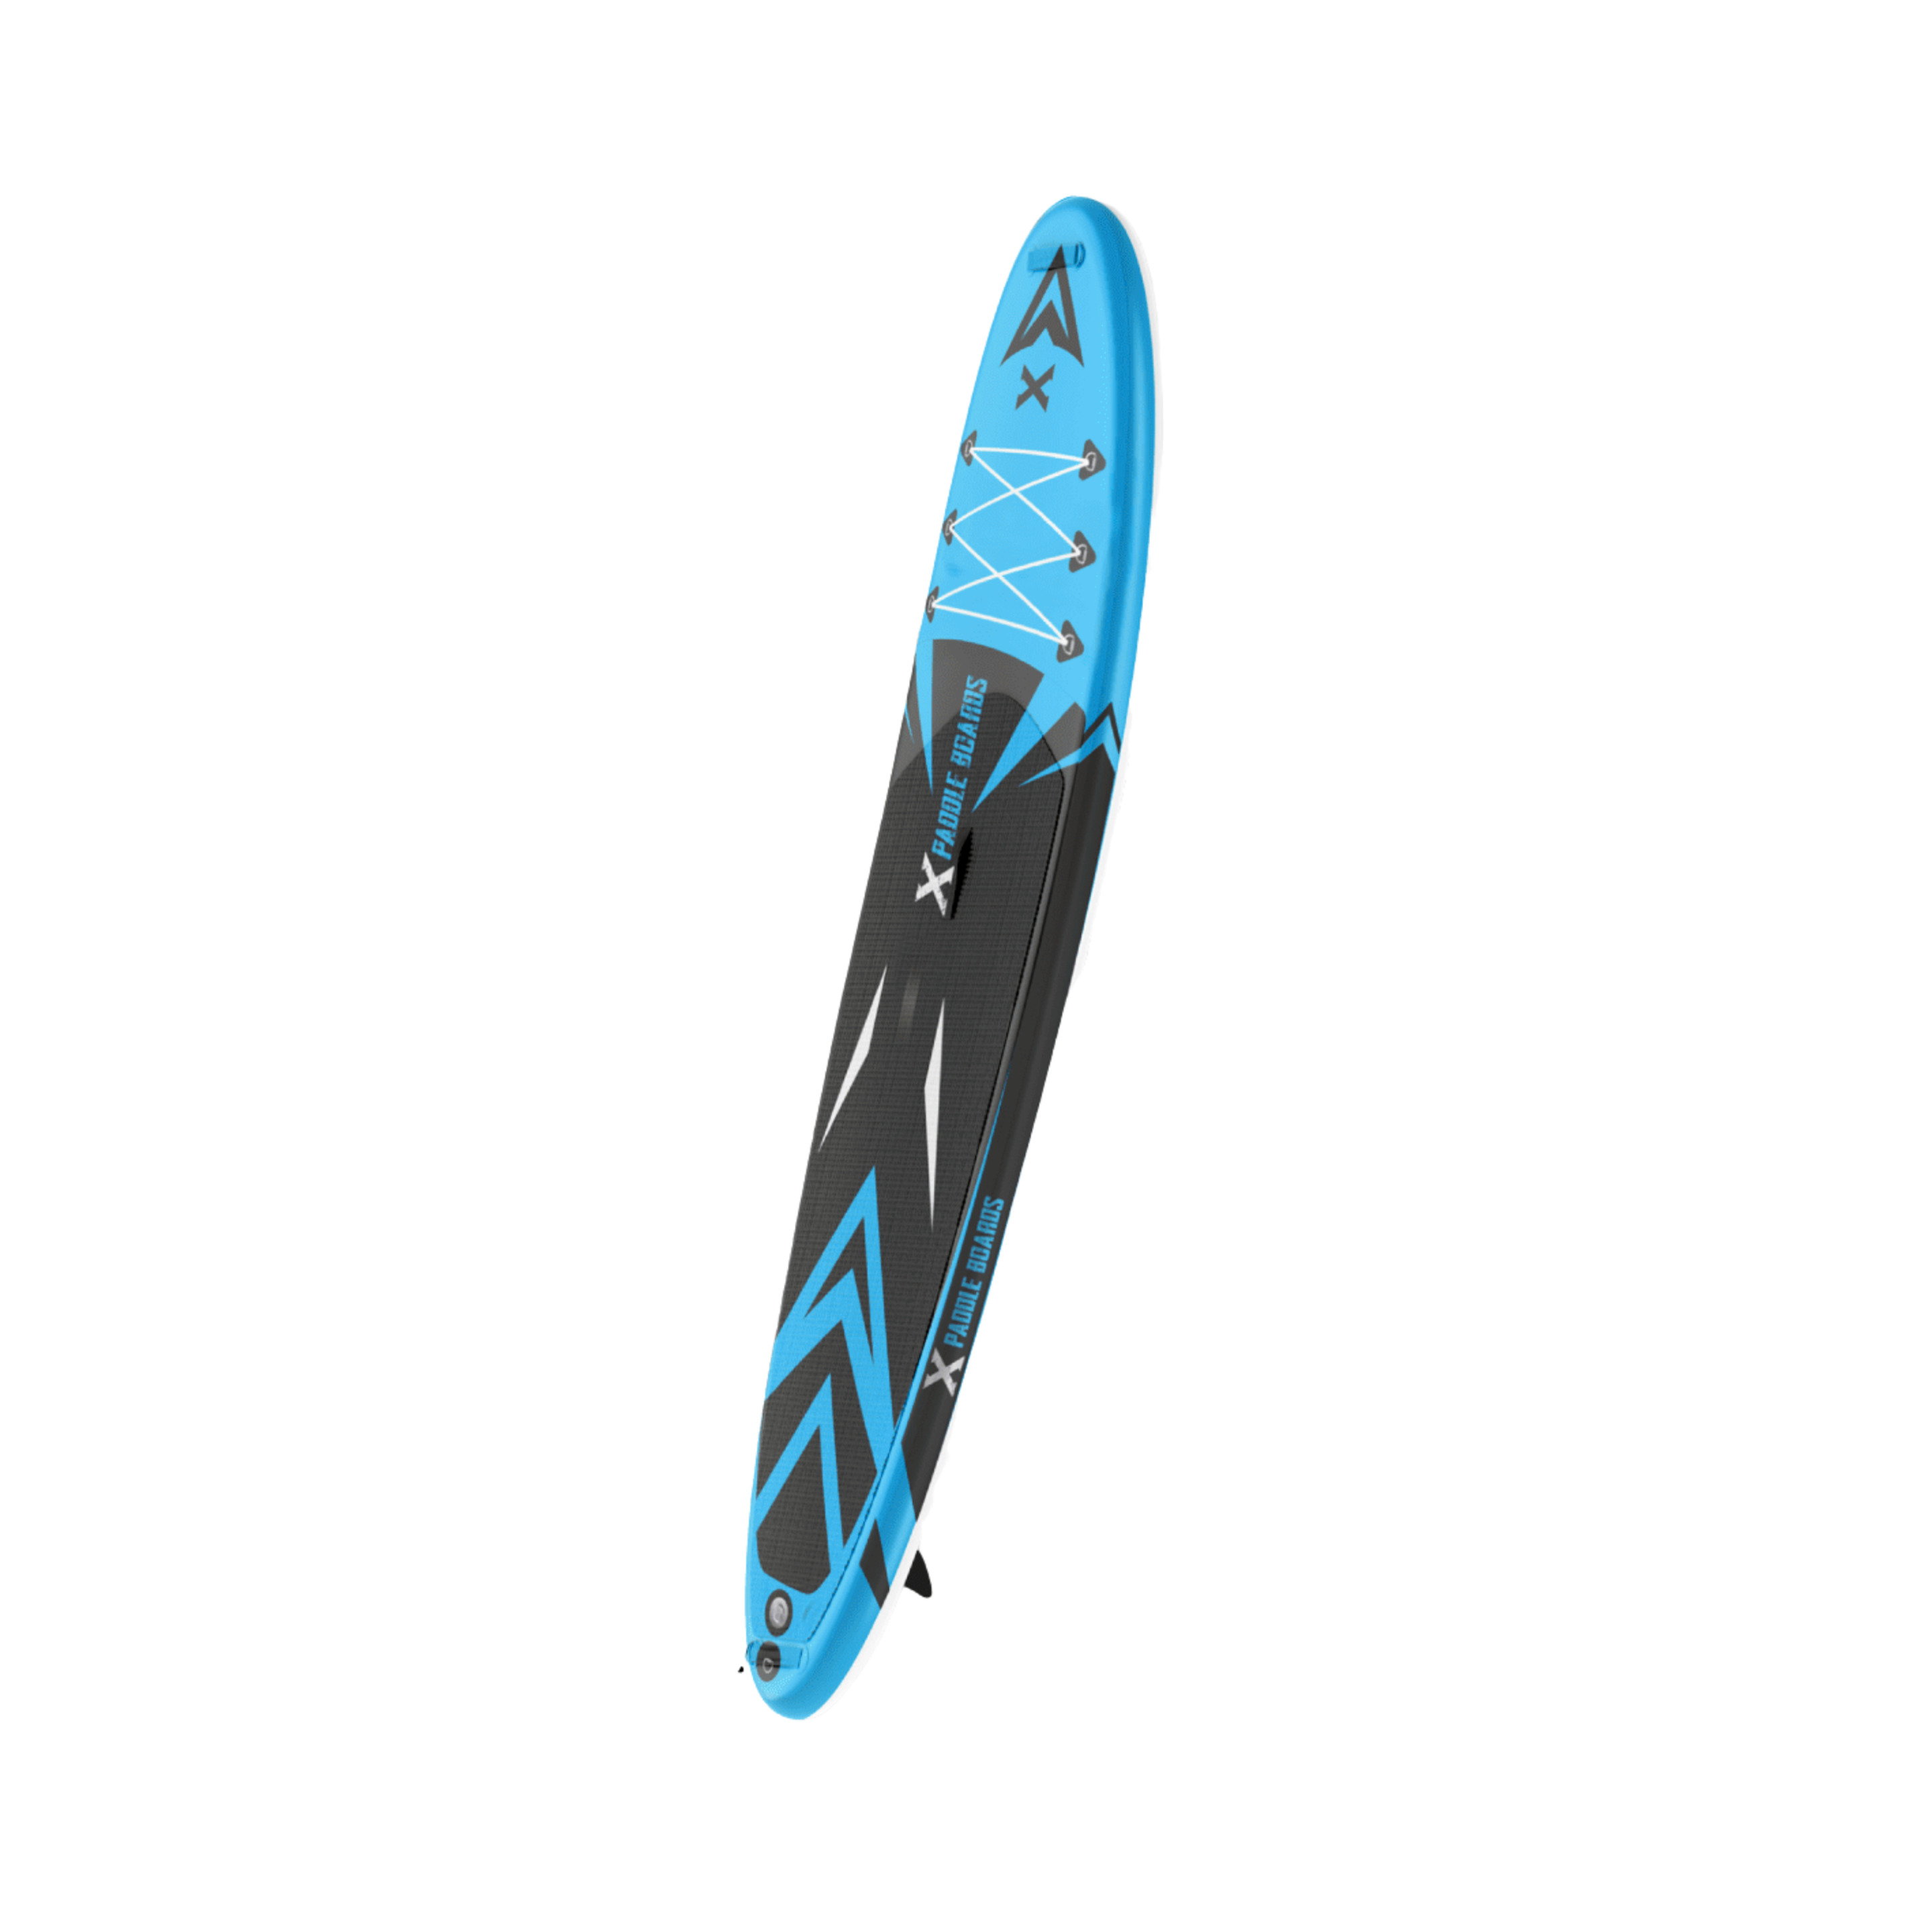 Tabla De Paddle Surf Hinchable  X-treme Kayak 320 X 82 X 15 Cm - Azul Aqua  MKP